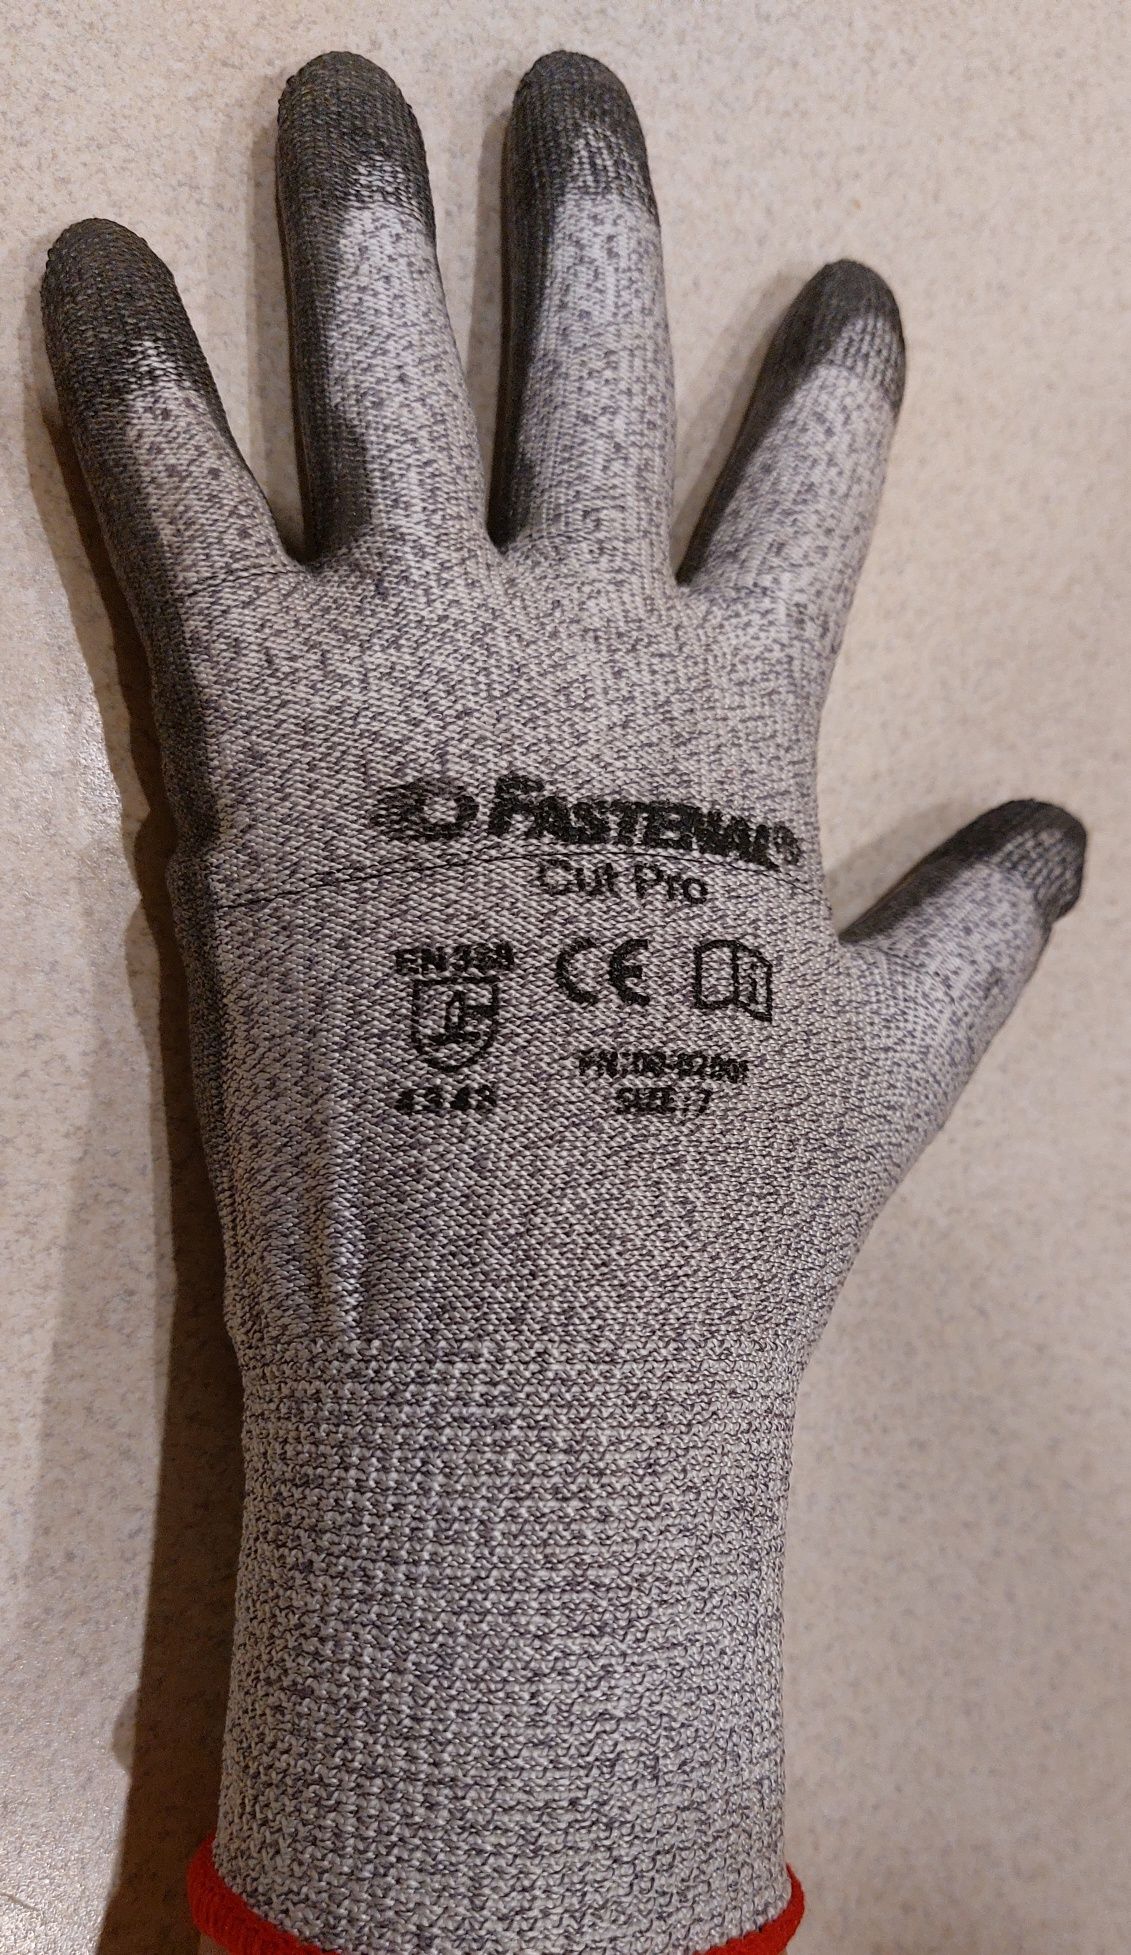 Rękawice robocze Fastenal Cut Pro size 11, szt.20